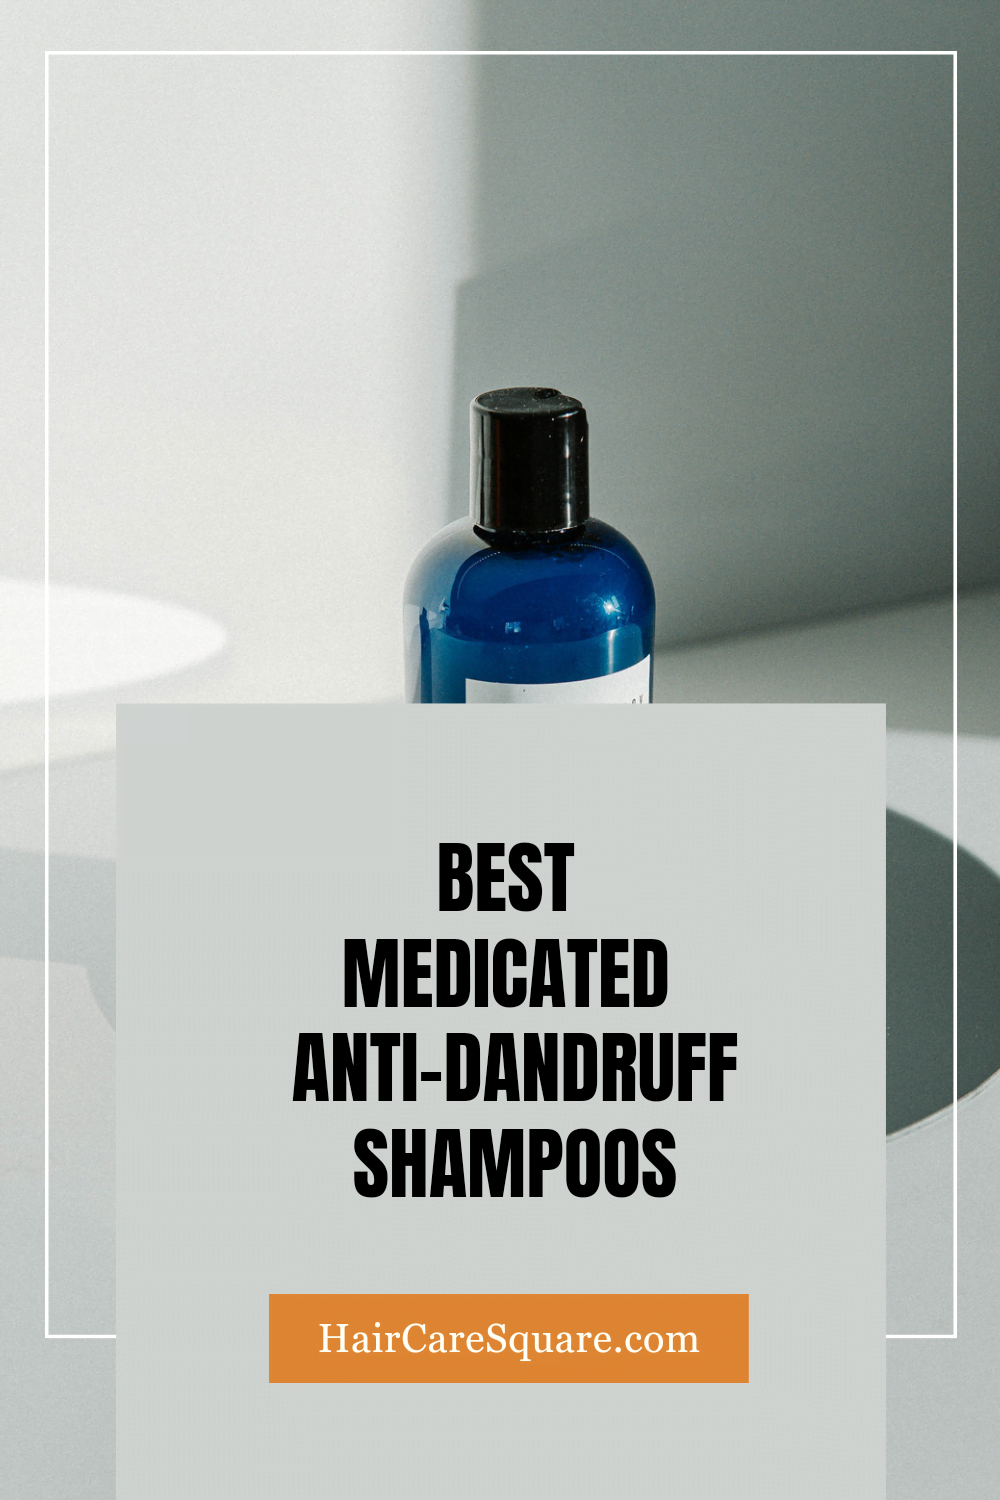 medicated anti-dandruff shampoo